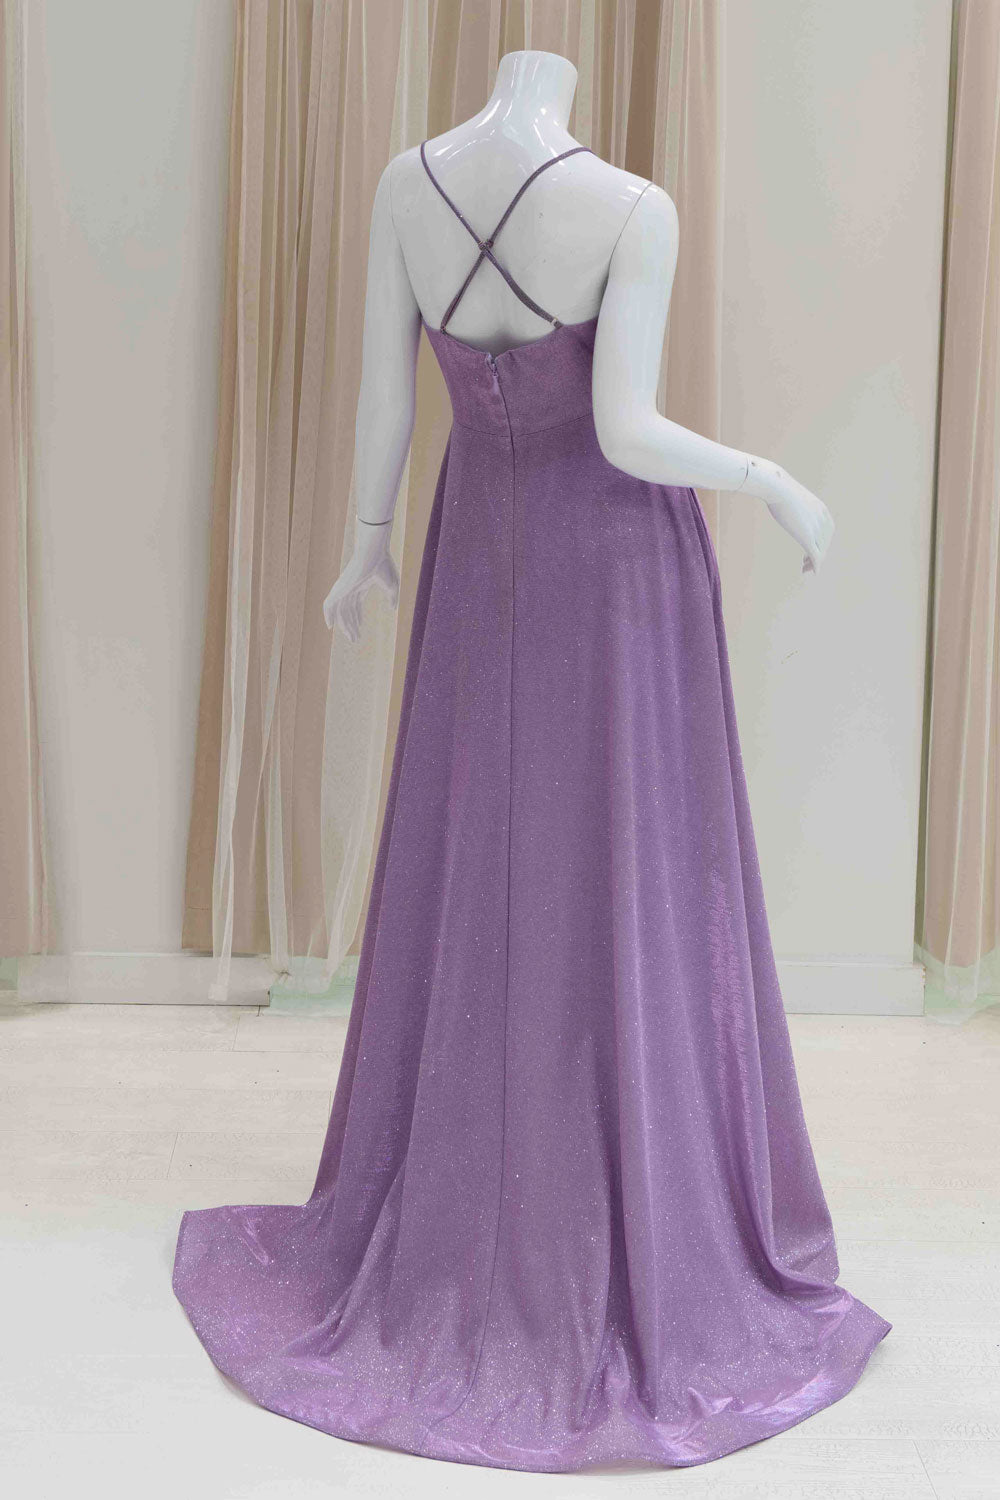 Sparkly Lavender Bridesmaids Dress